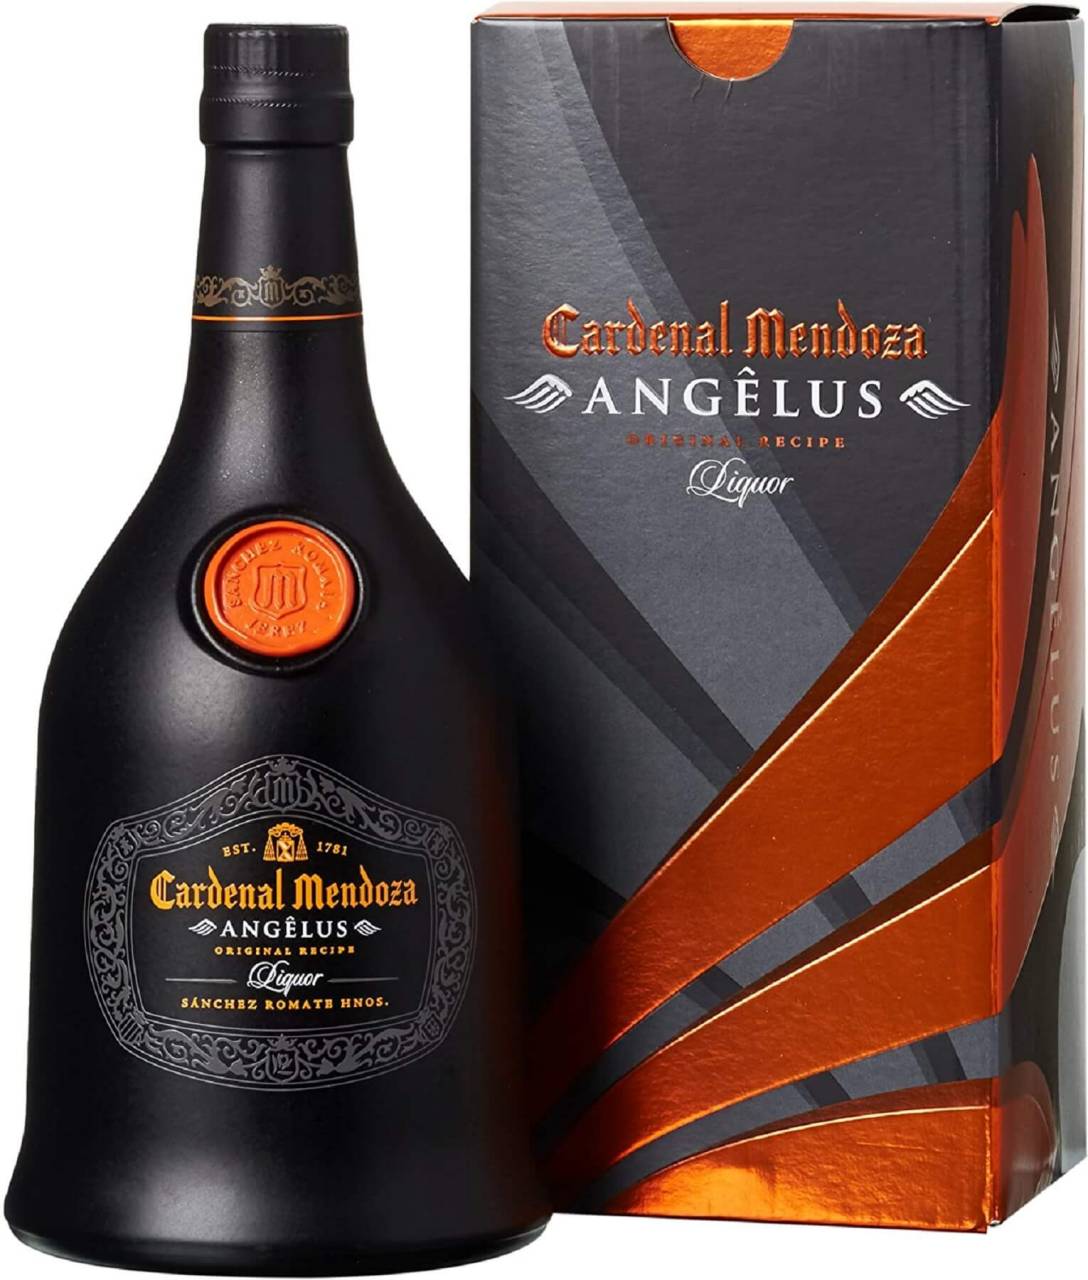 Cardenal Mendoza Angelus 0,7 Liter